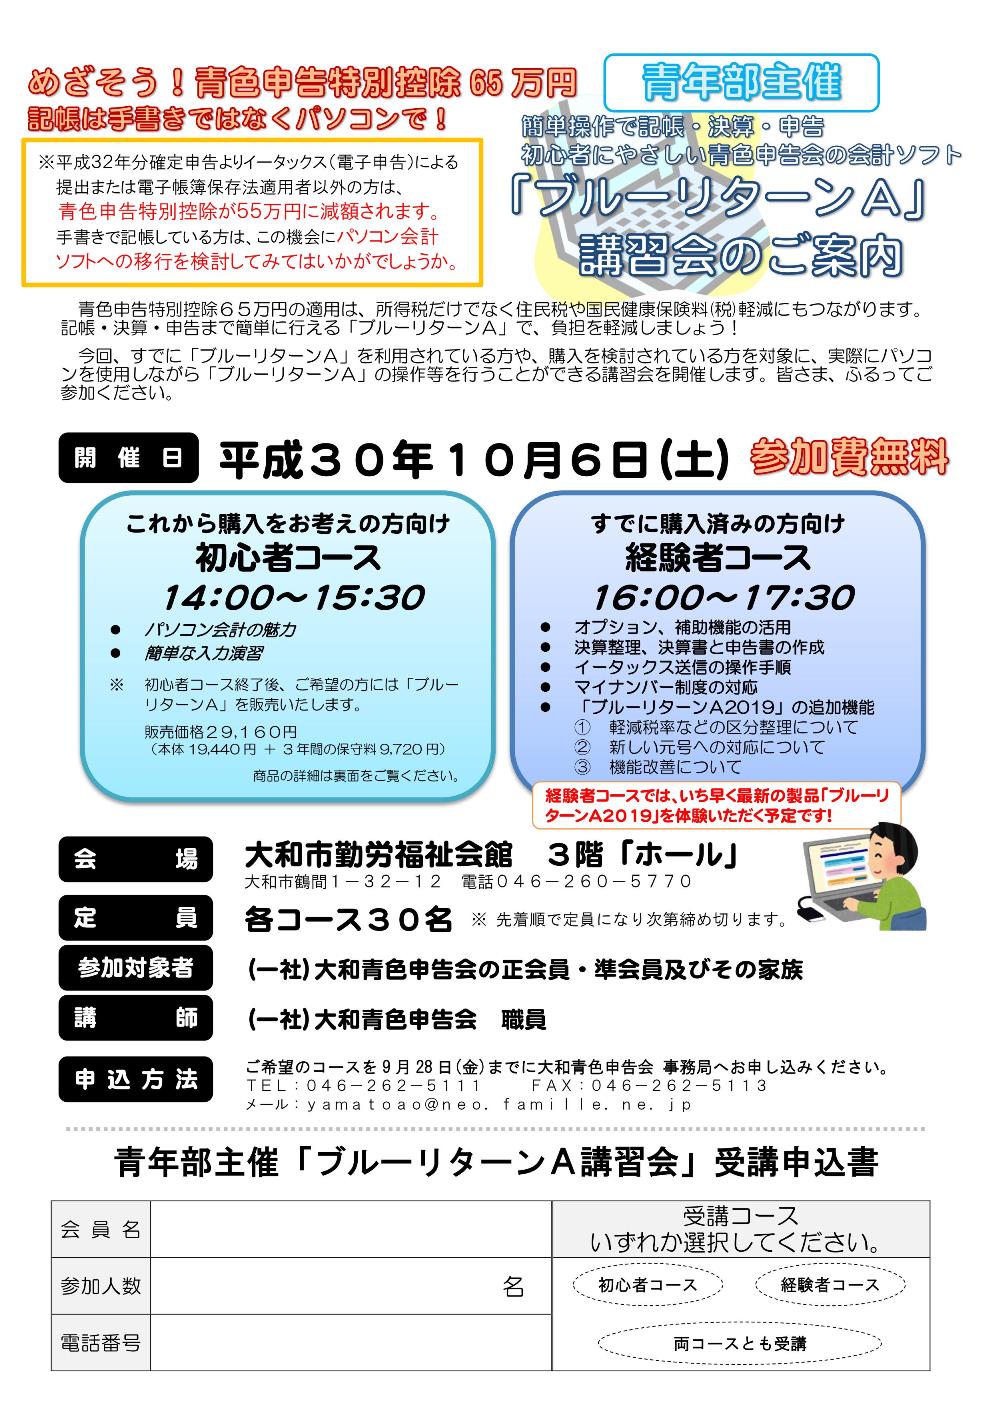 http://www.shokonet.or.jp/aoiro/yamato/news/seinenbu%20brakousyuukai_2018-10-06_01.jpg